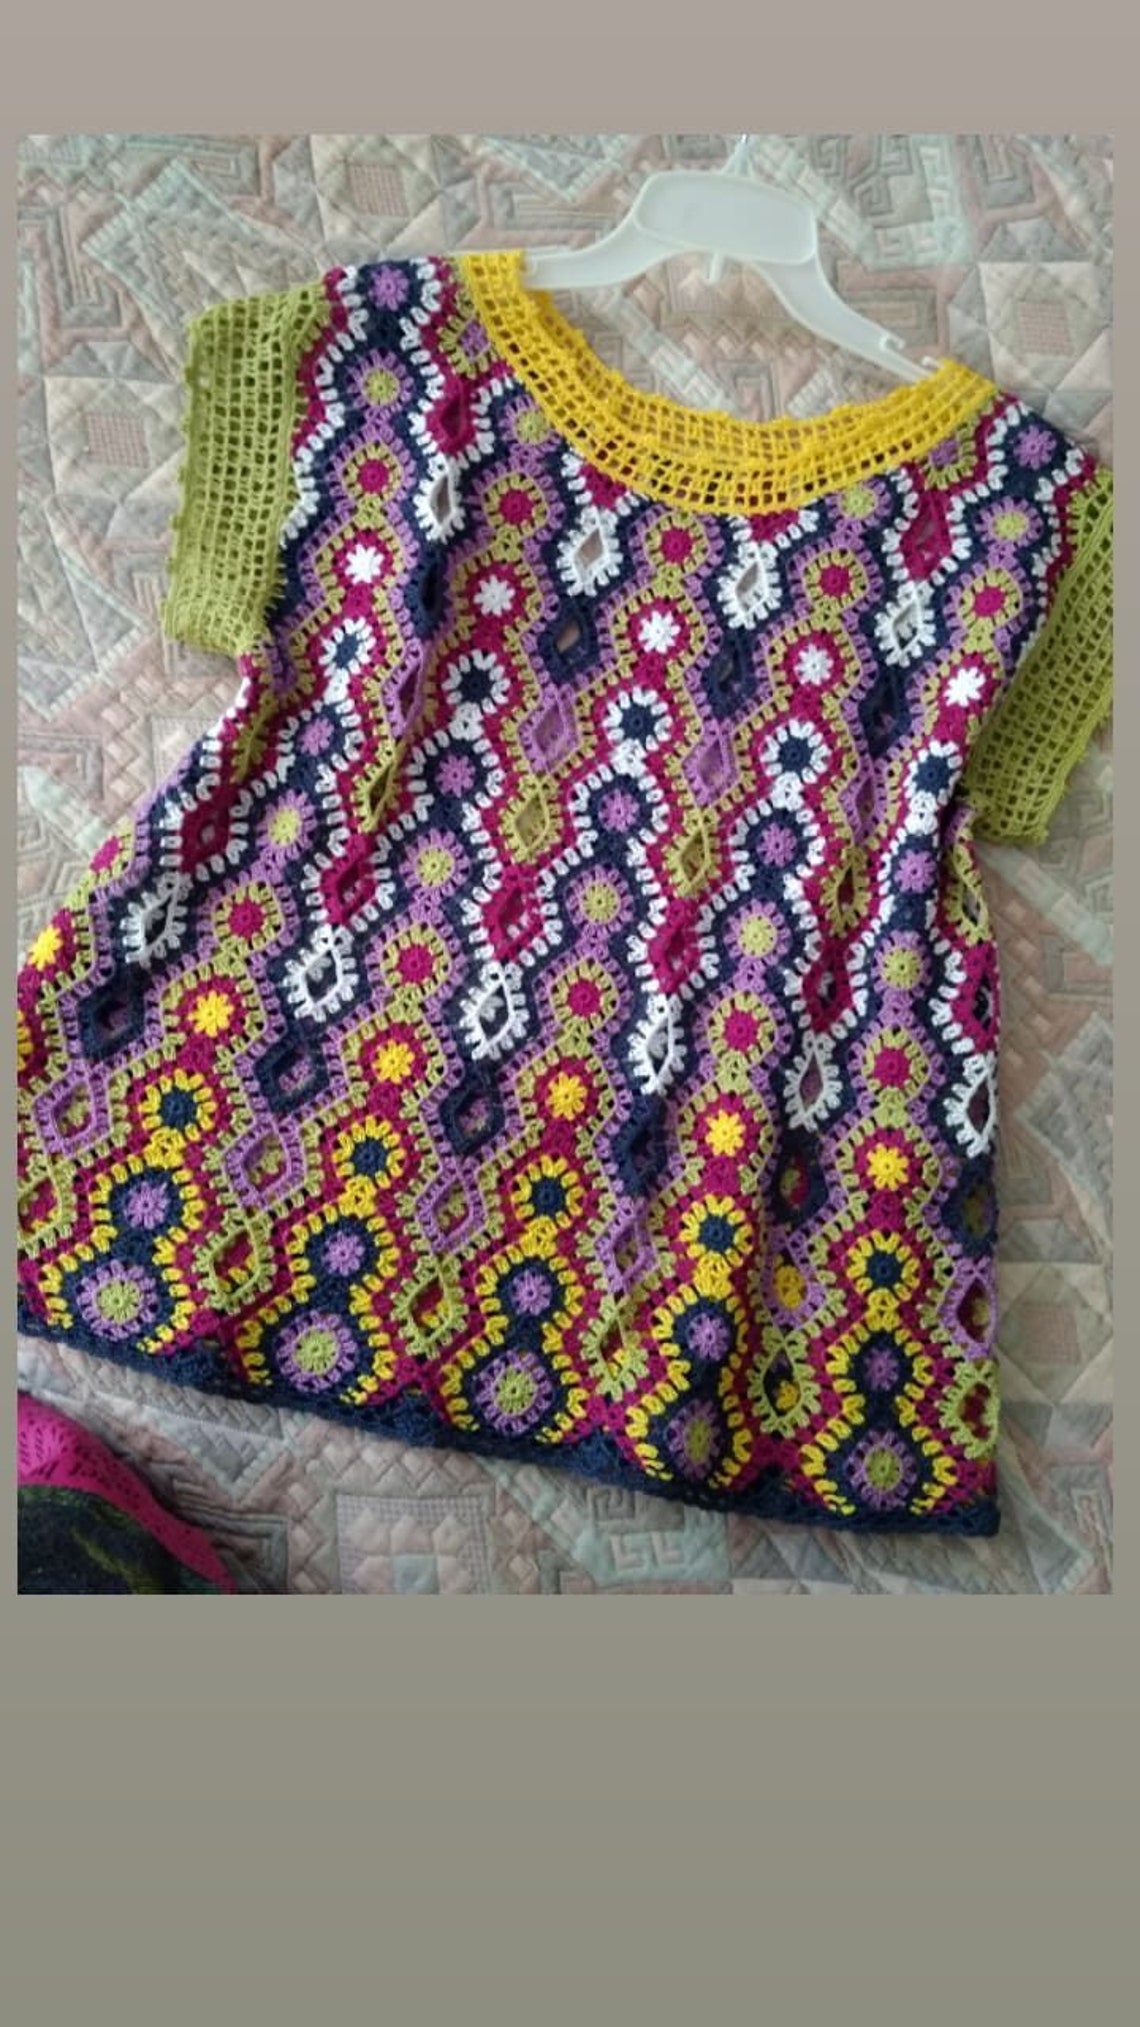 Multicolored Crochet Top/women's Cotton Top - Etsy